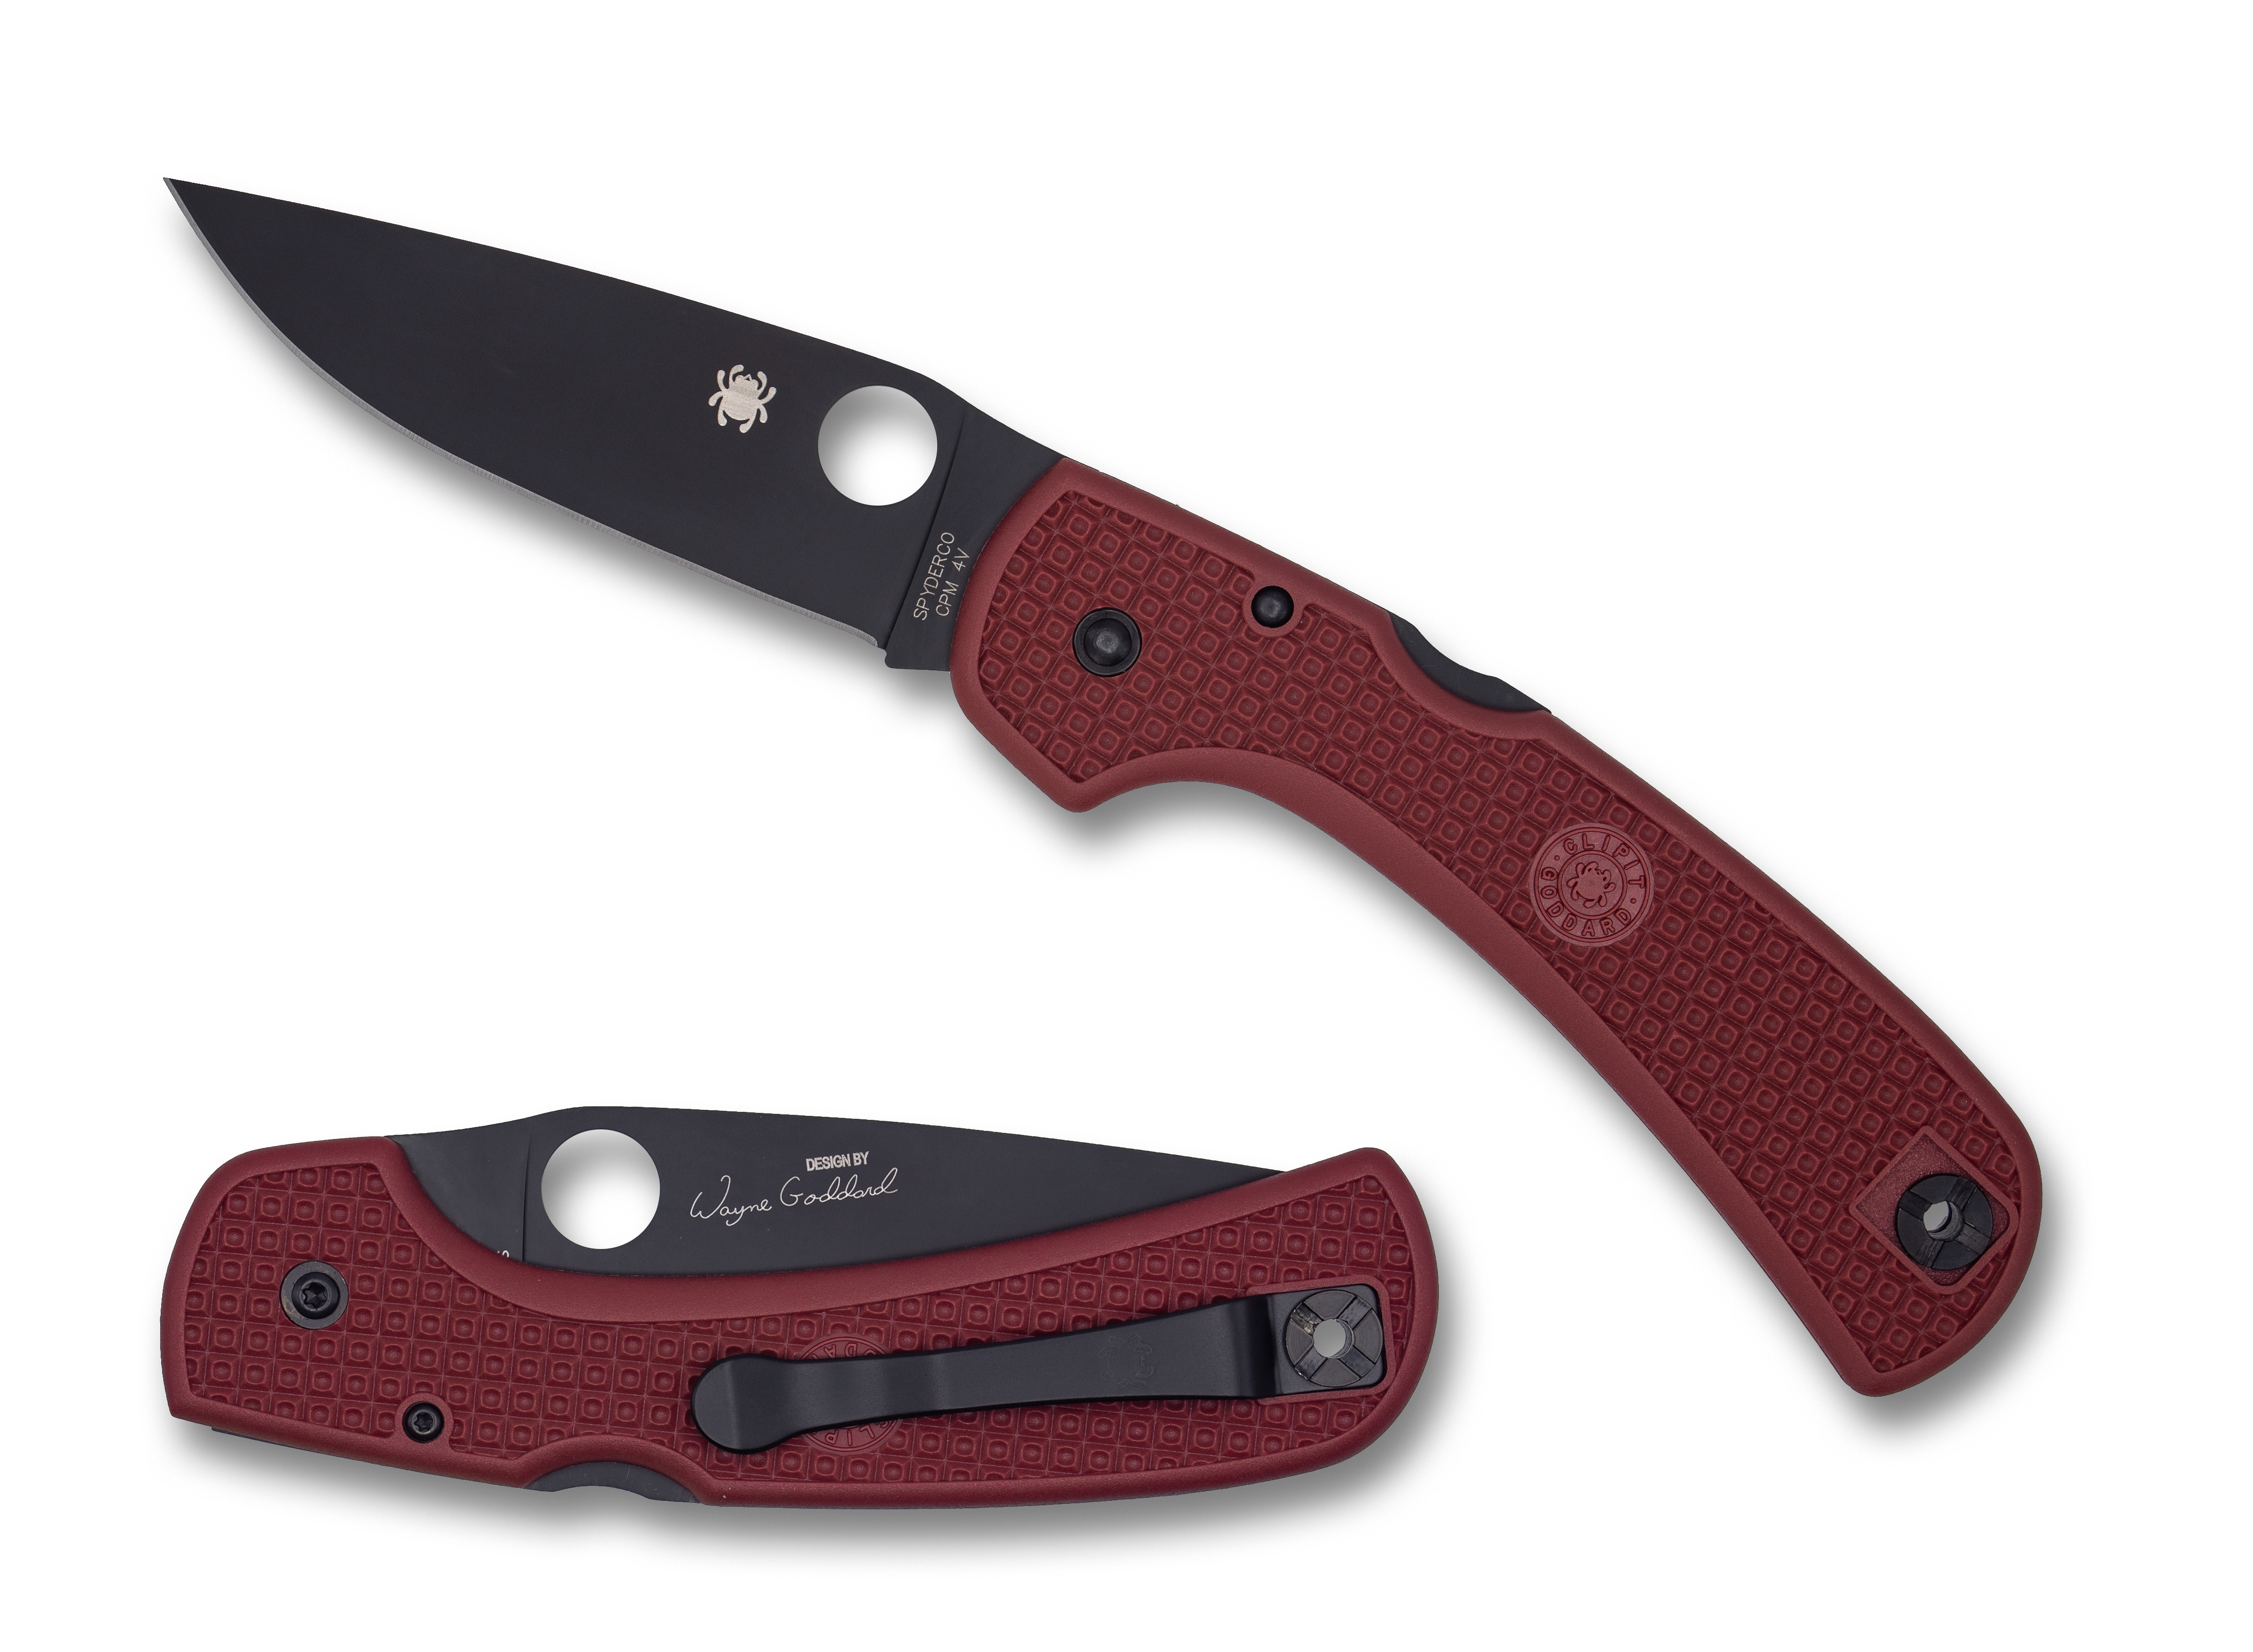 Spyderco Goddard - Red FRN - Black CPM-4V Blade - St. Nick's Knives Exclusive - C16FPRDBK